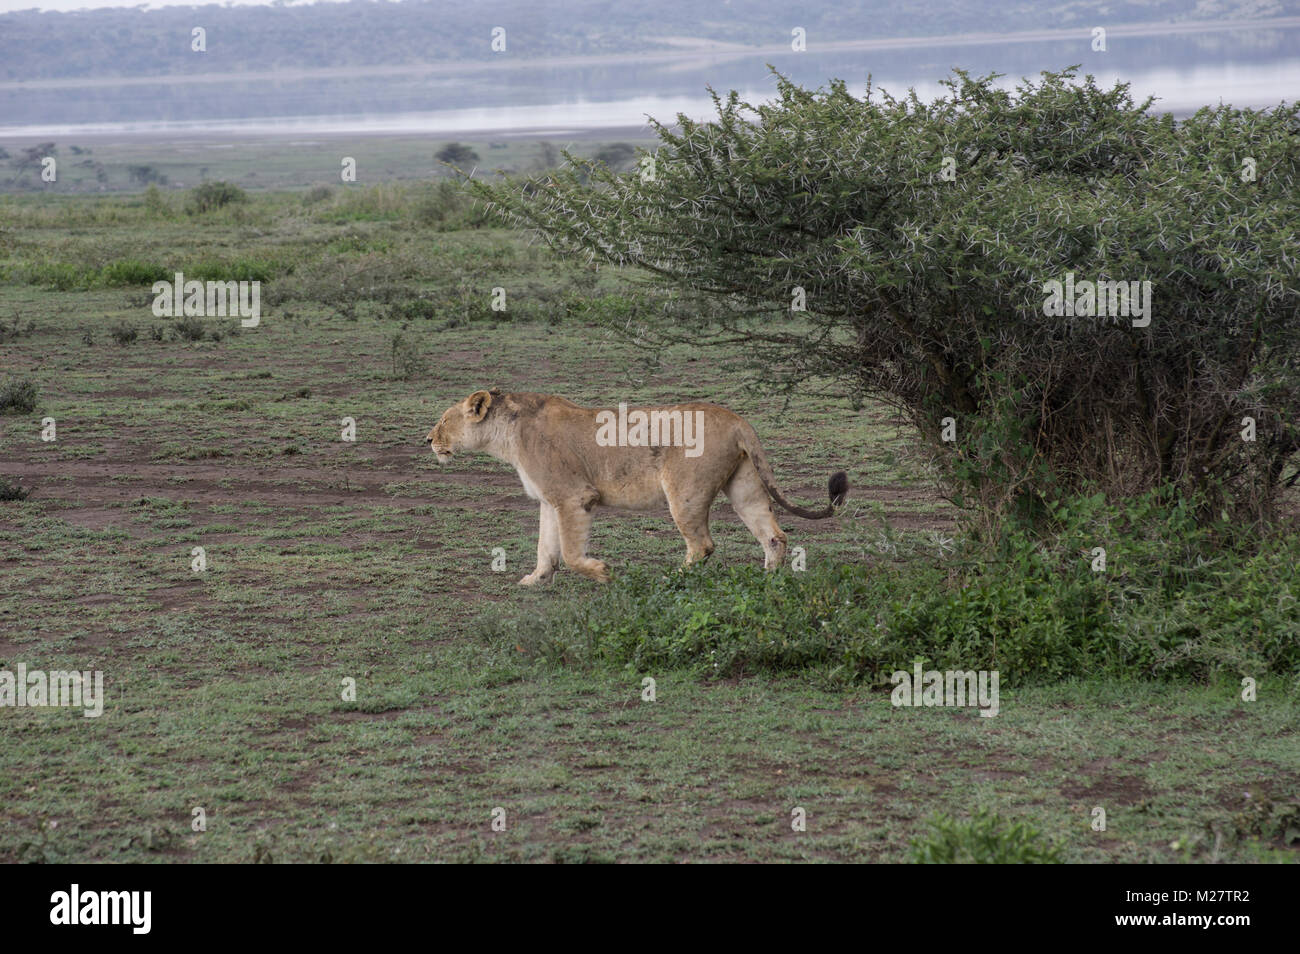 Female lioness in the Serengeti walking near safari SUV vehicles Stock Photo